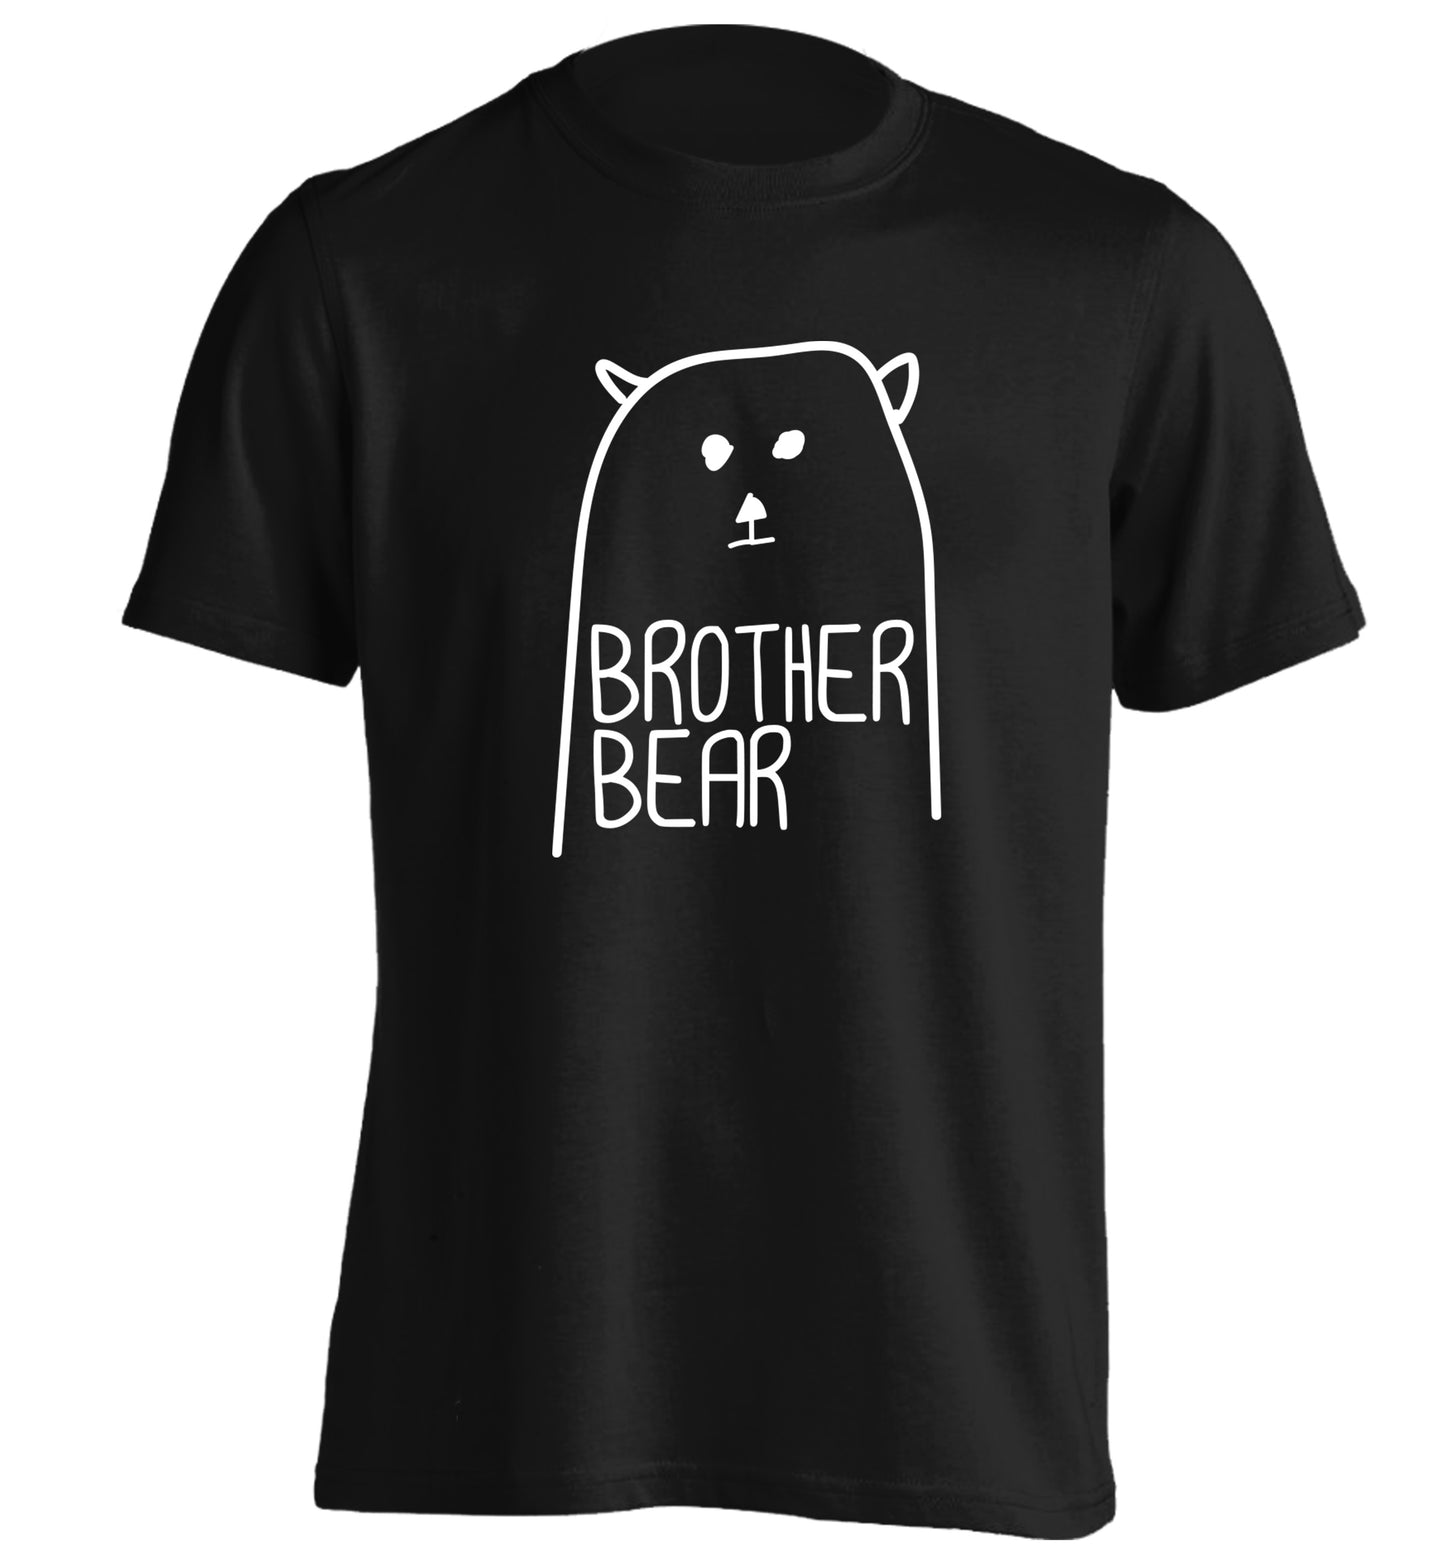 Brother bear adults unisex black Tshirt 2XL